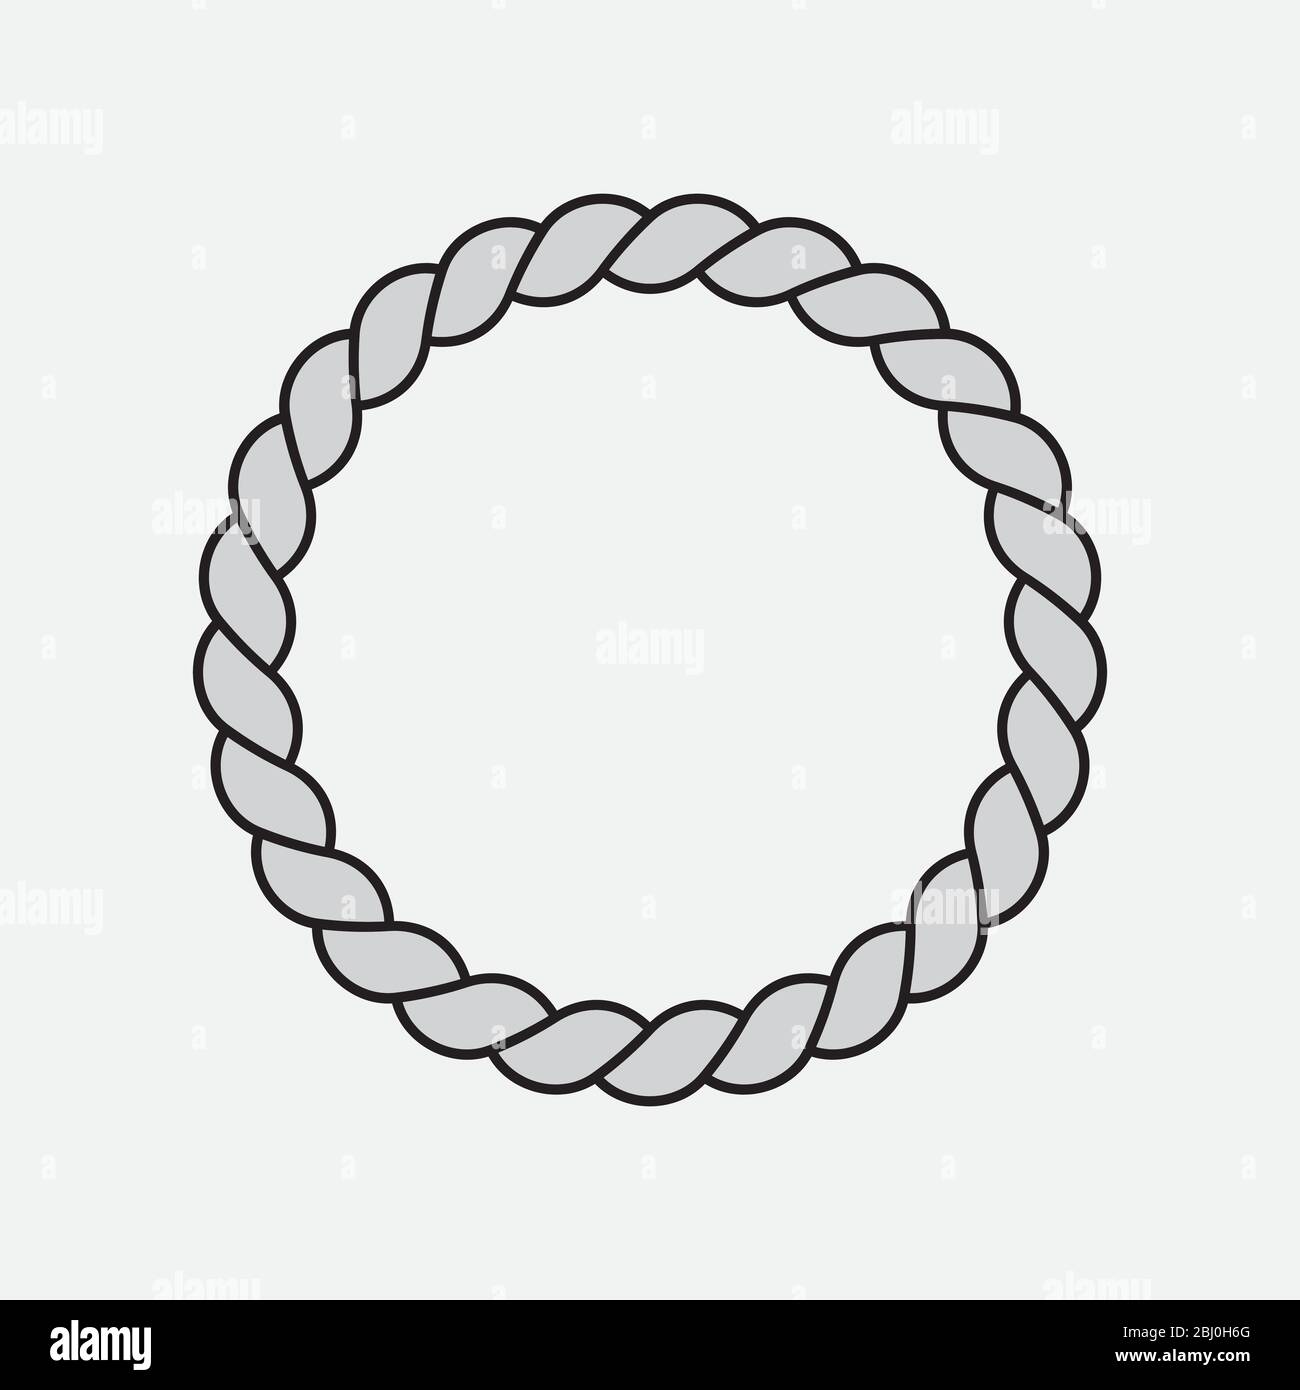 Vector icon illustration design of circle rope symbol on white